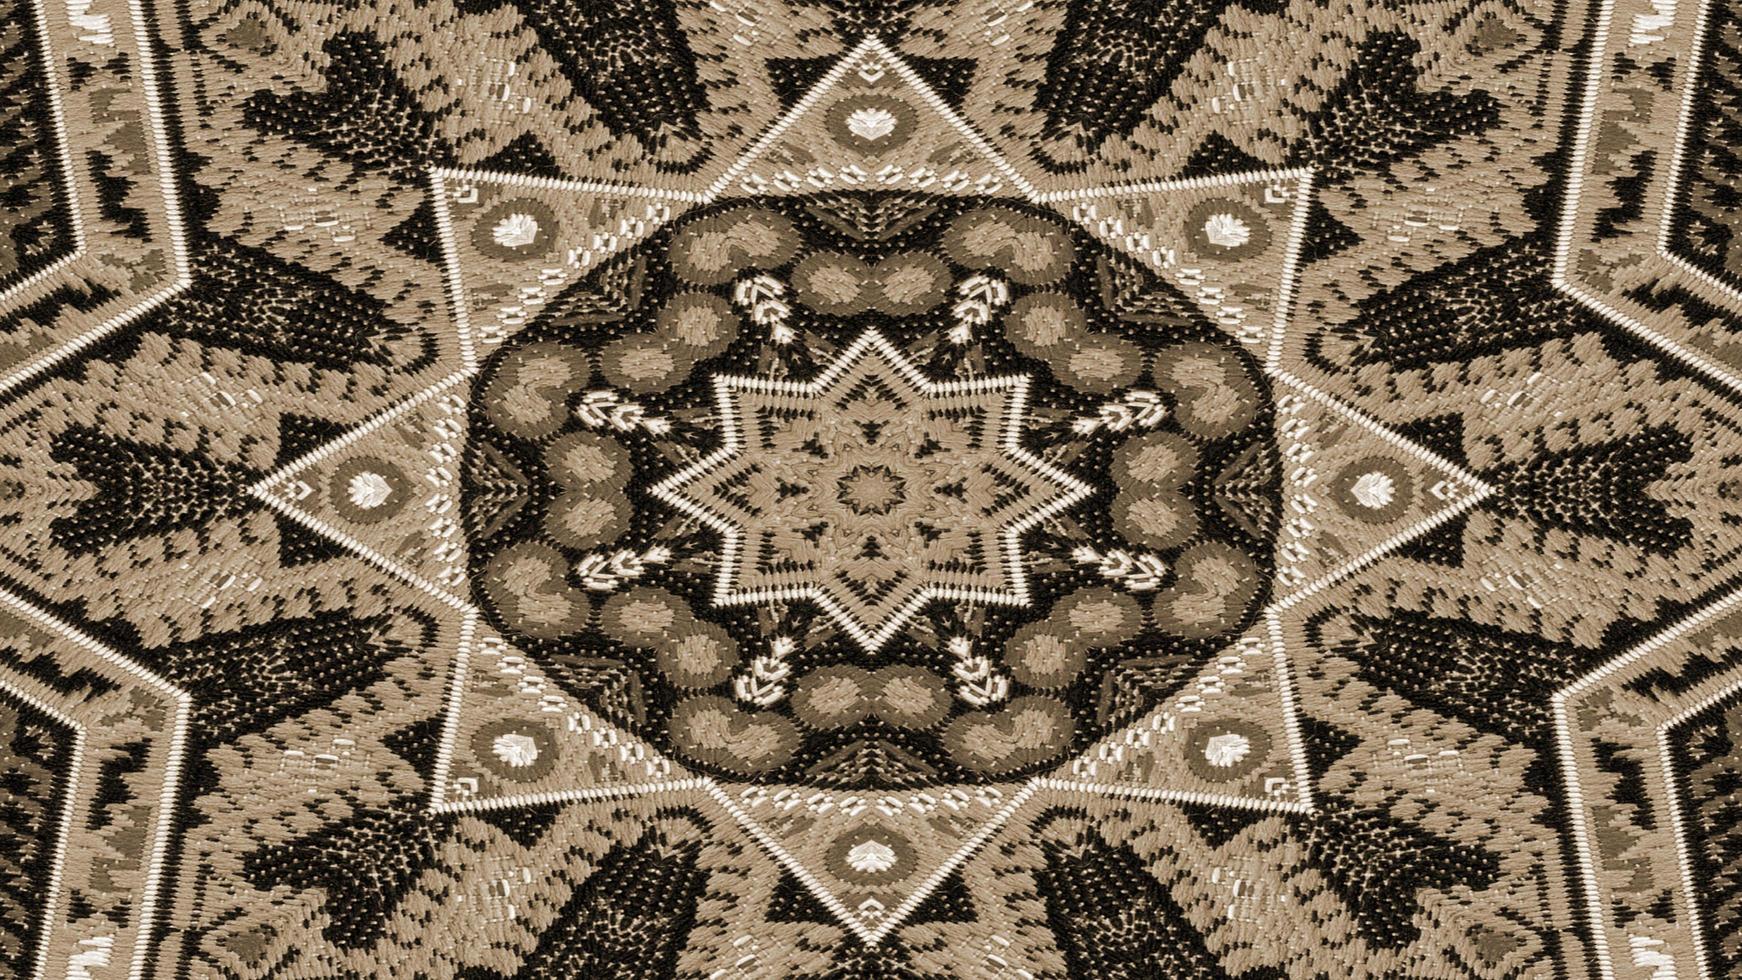 caleidoscopio de alfombra étnica auténtica foto